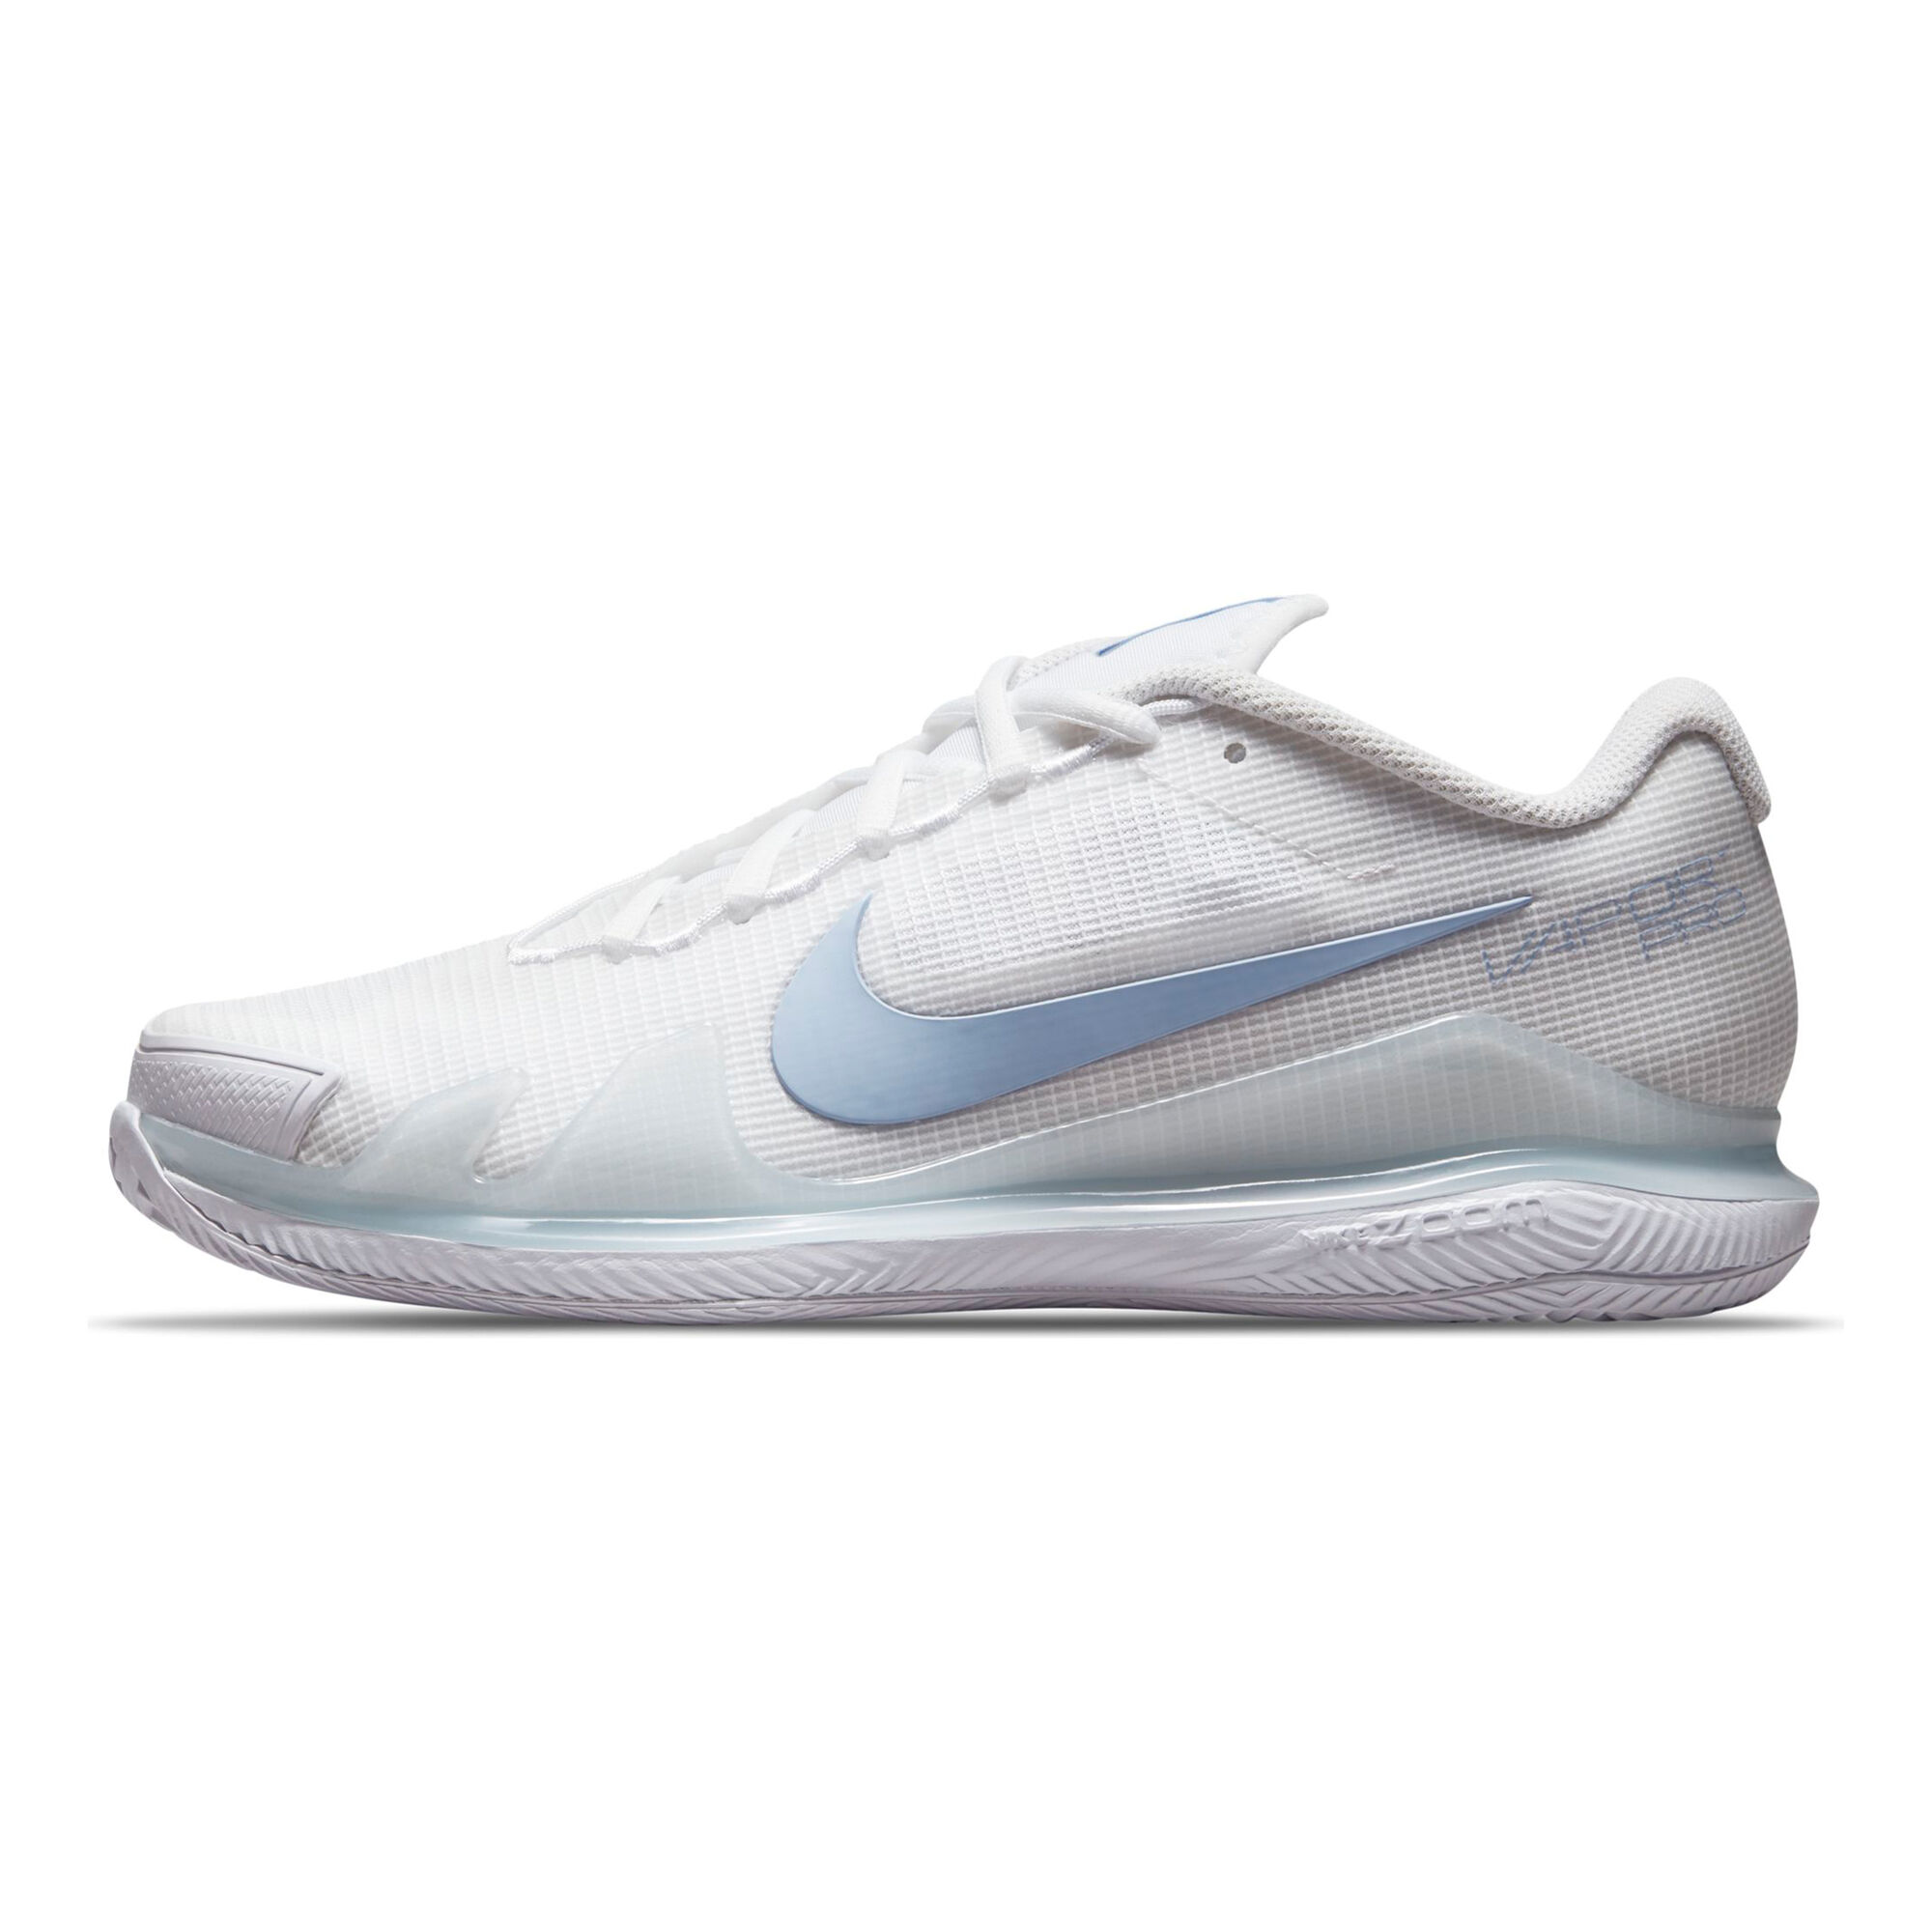 Buy Nike Air Zoom Vapor Pro Clay Court Shoe Women White, Light Blue ...